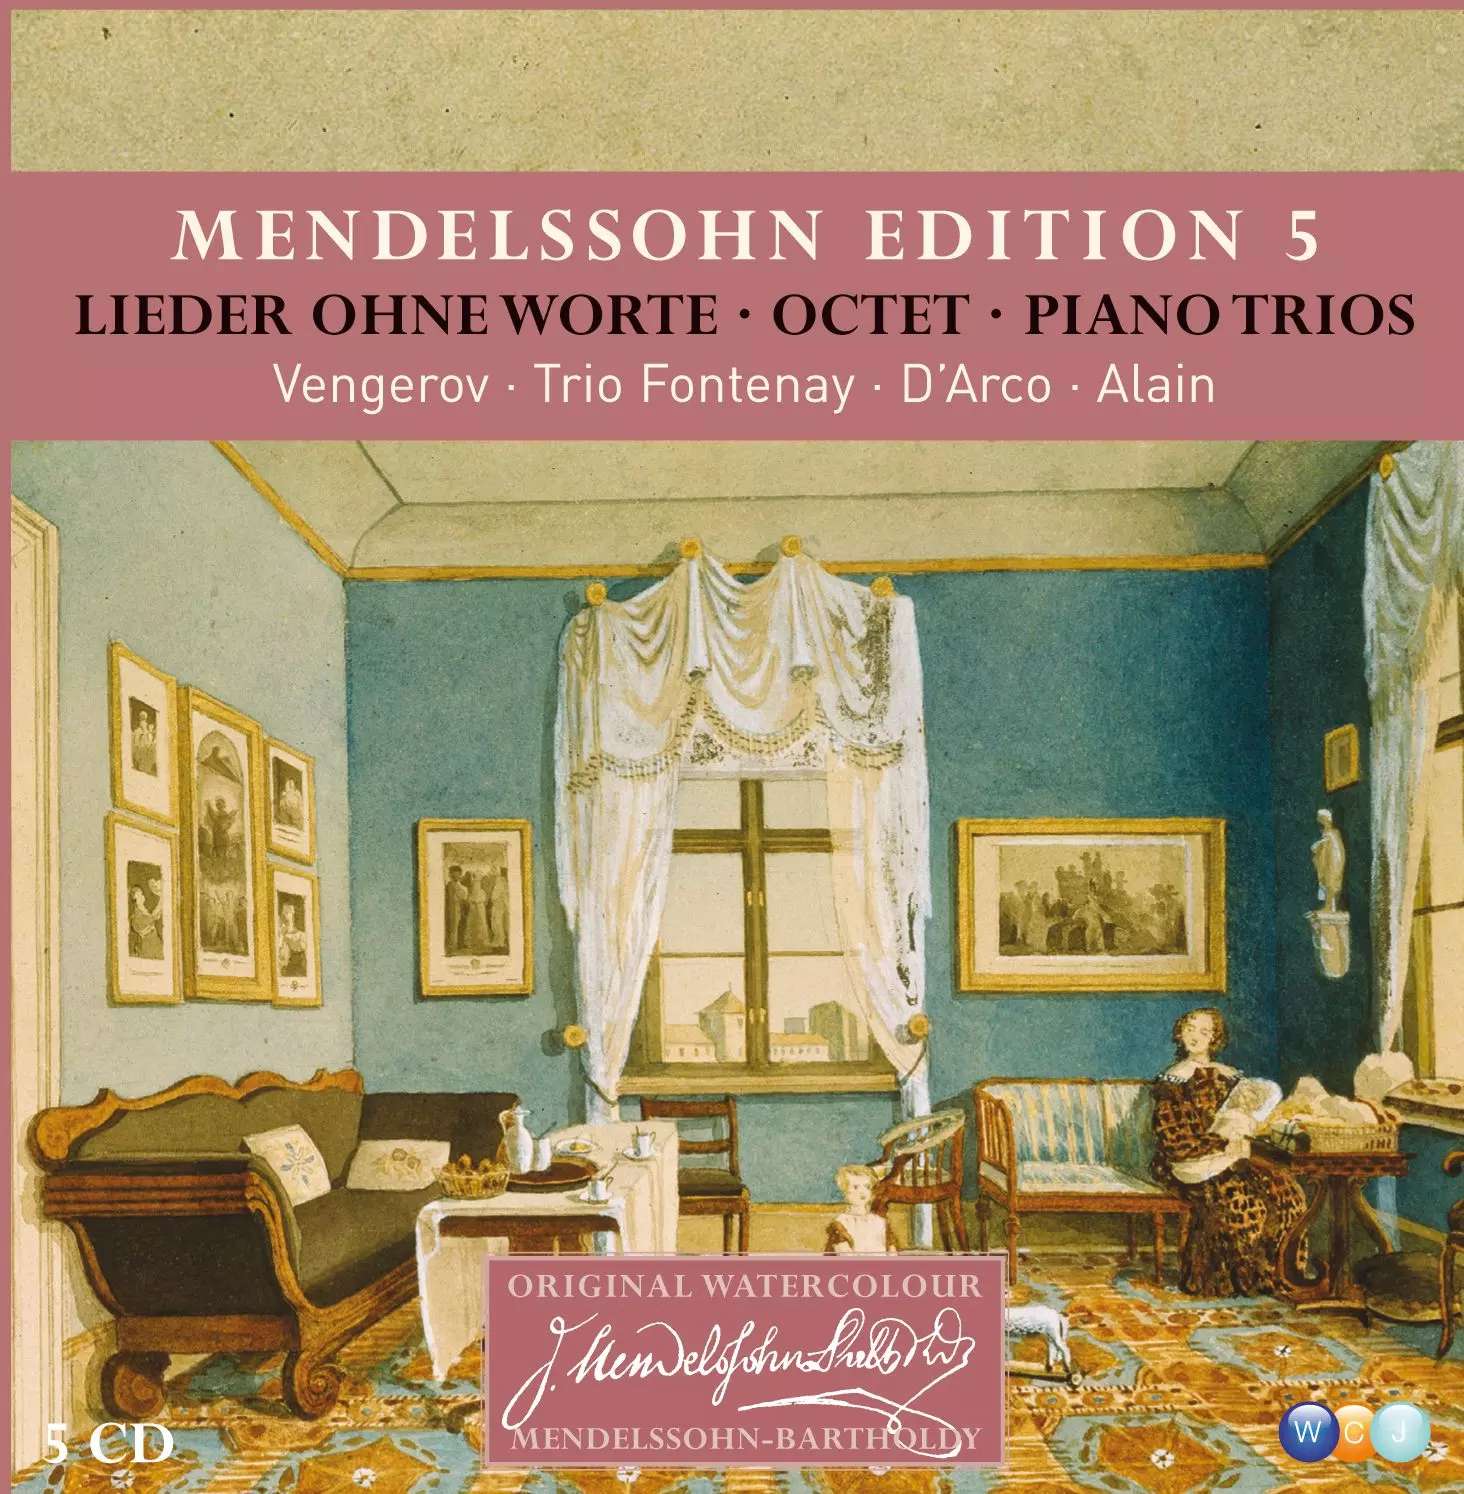 Mendelssohn Edition Vol. 5 Keyboard and Chamber Music